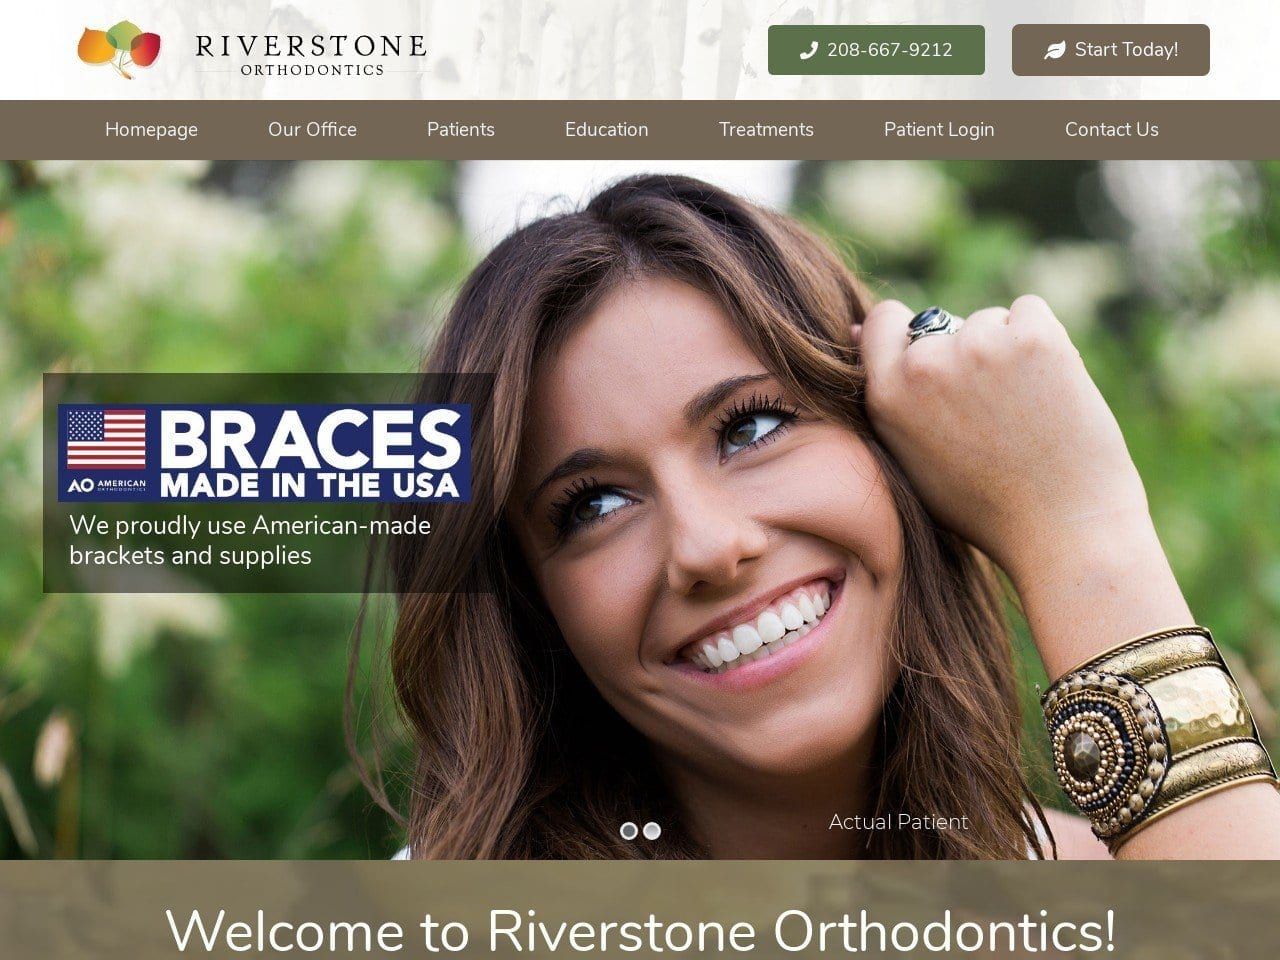 Riverstone Orthodontics Website Screenshot from drchaffee.com